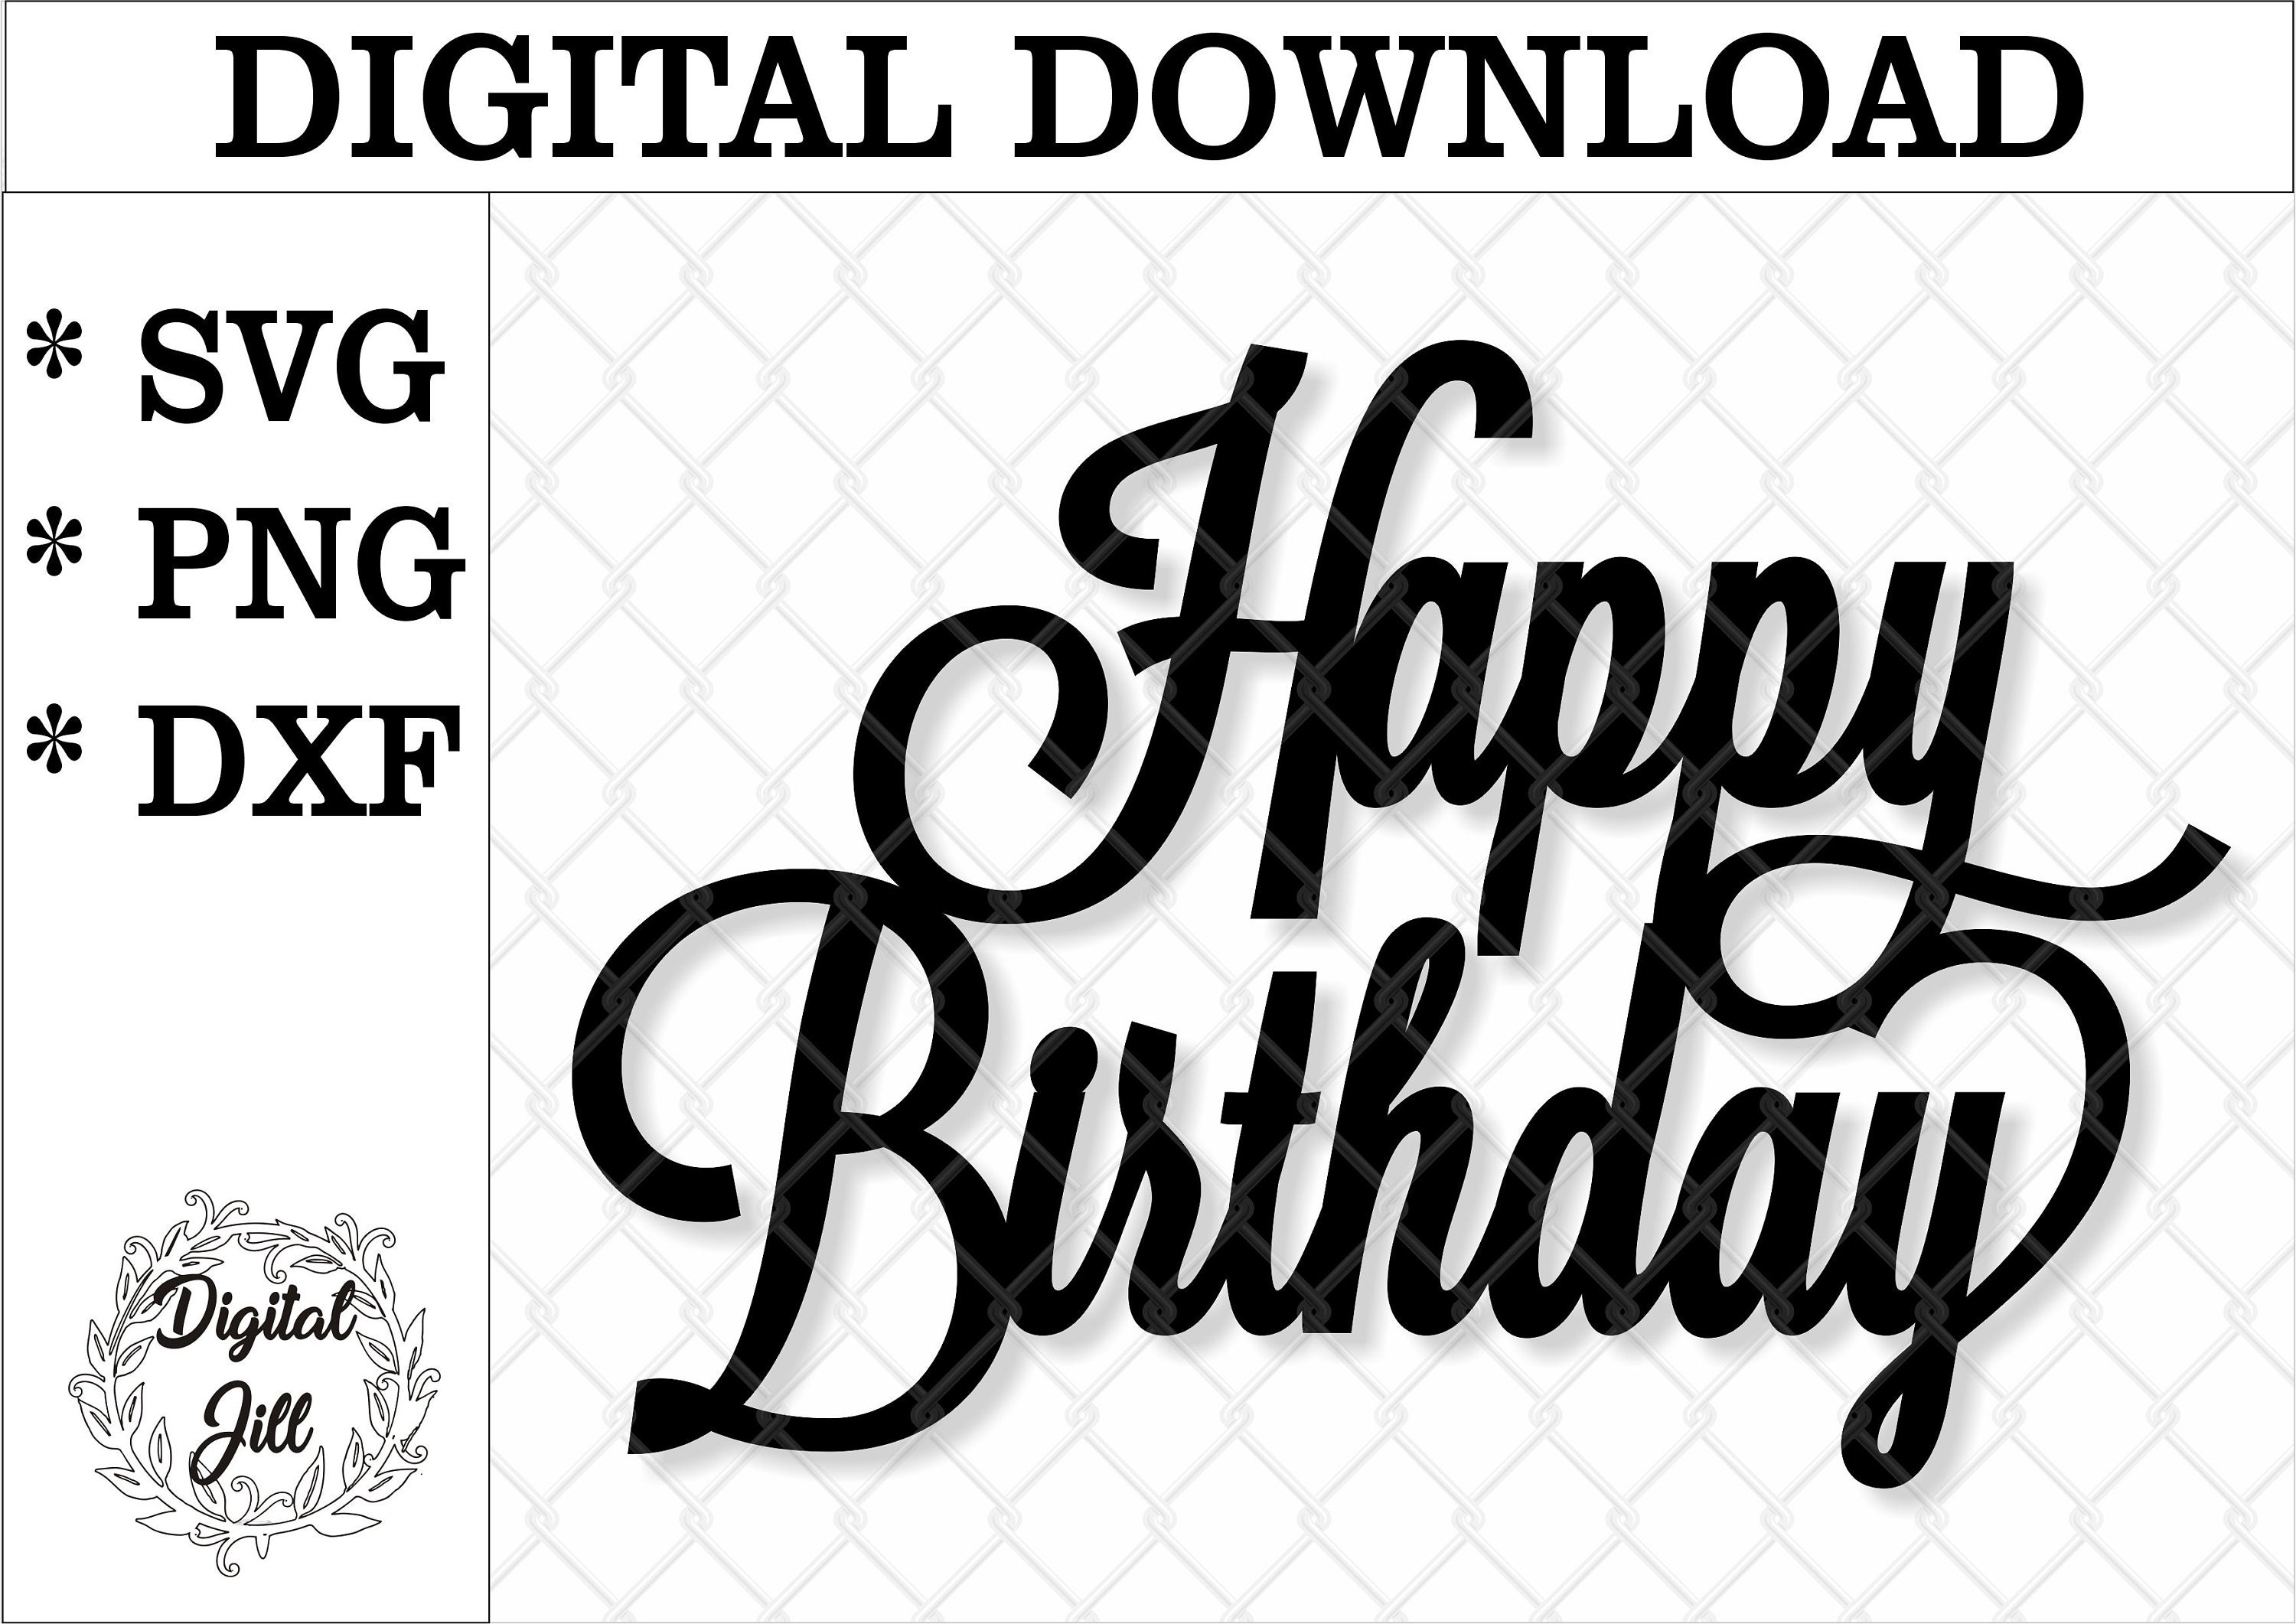 Happy Birthday Cake topper svg. Happy birthday laser cut dxf file. Digital  download cake topper. Cake topper on stick, Happy birthday dxf